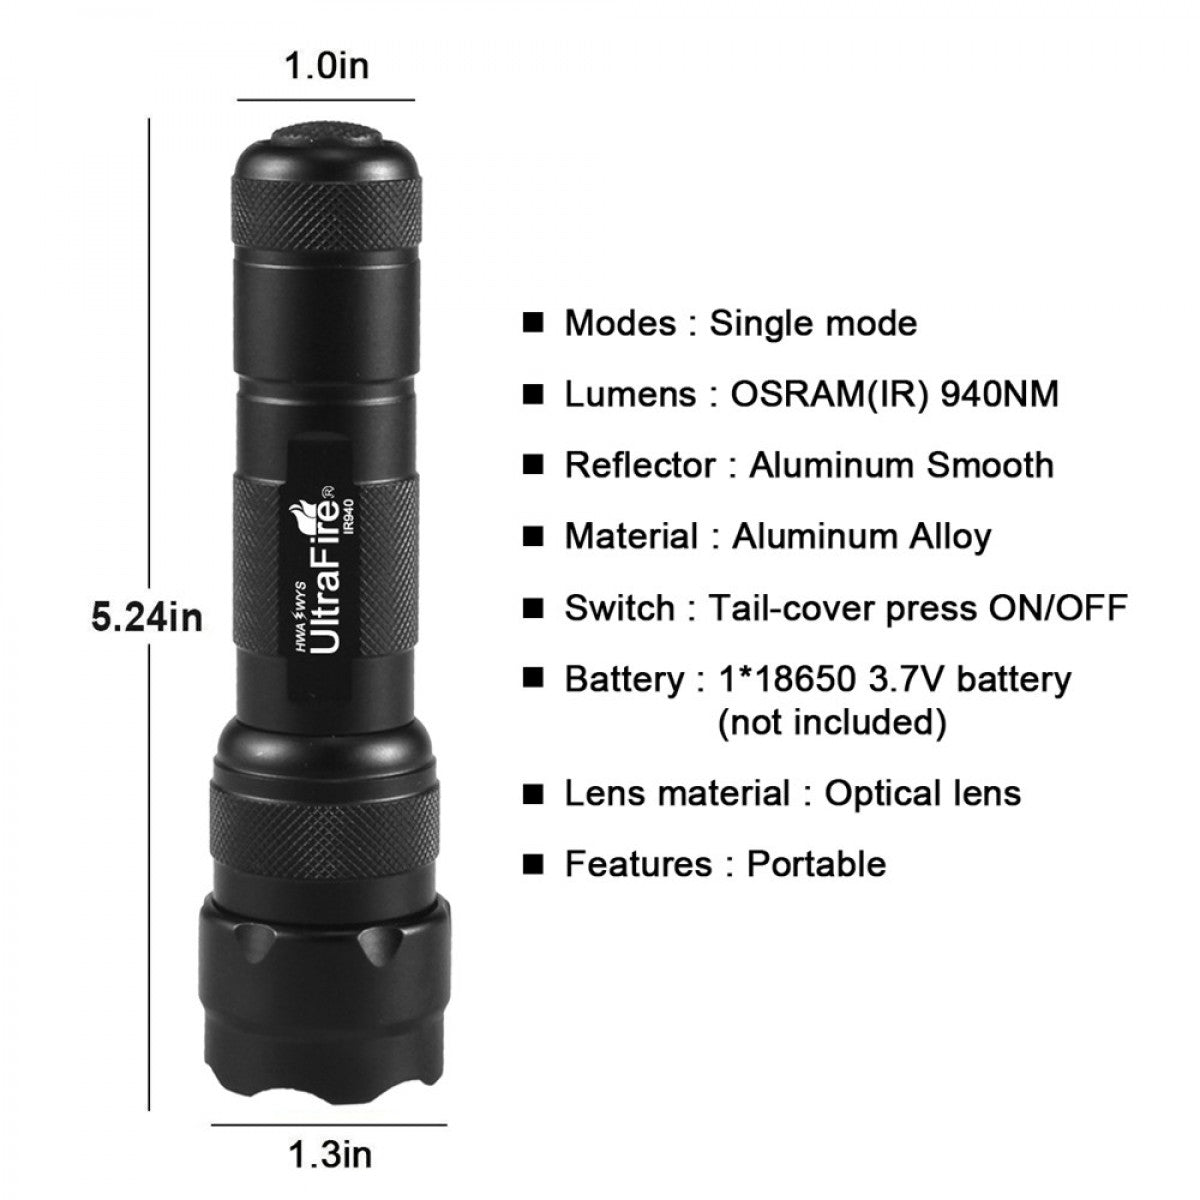 UltraFire Focusing Infrared Night Vision Flashlight 502B 10W LED Tactical Flashlight Infrared Anti-Hunting